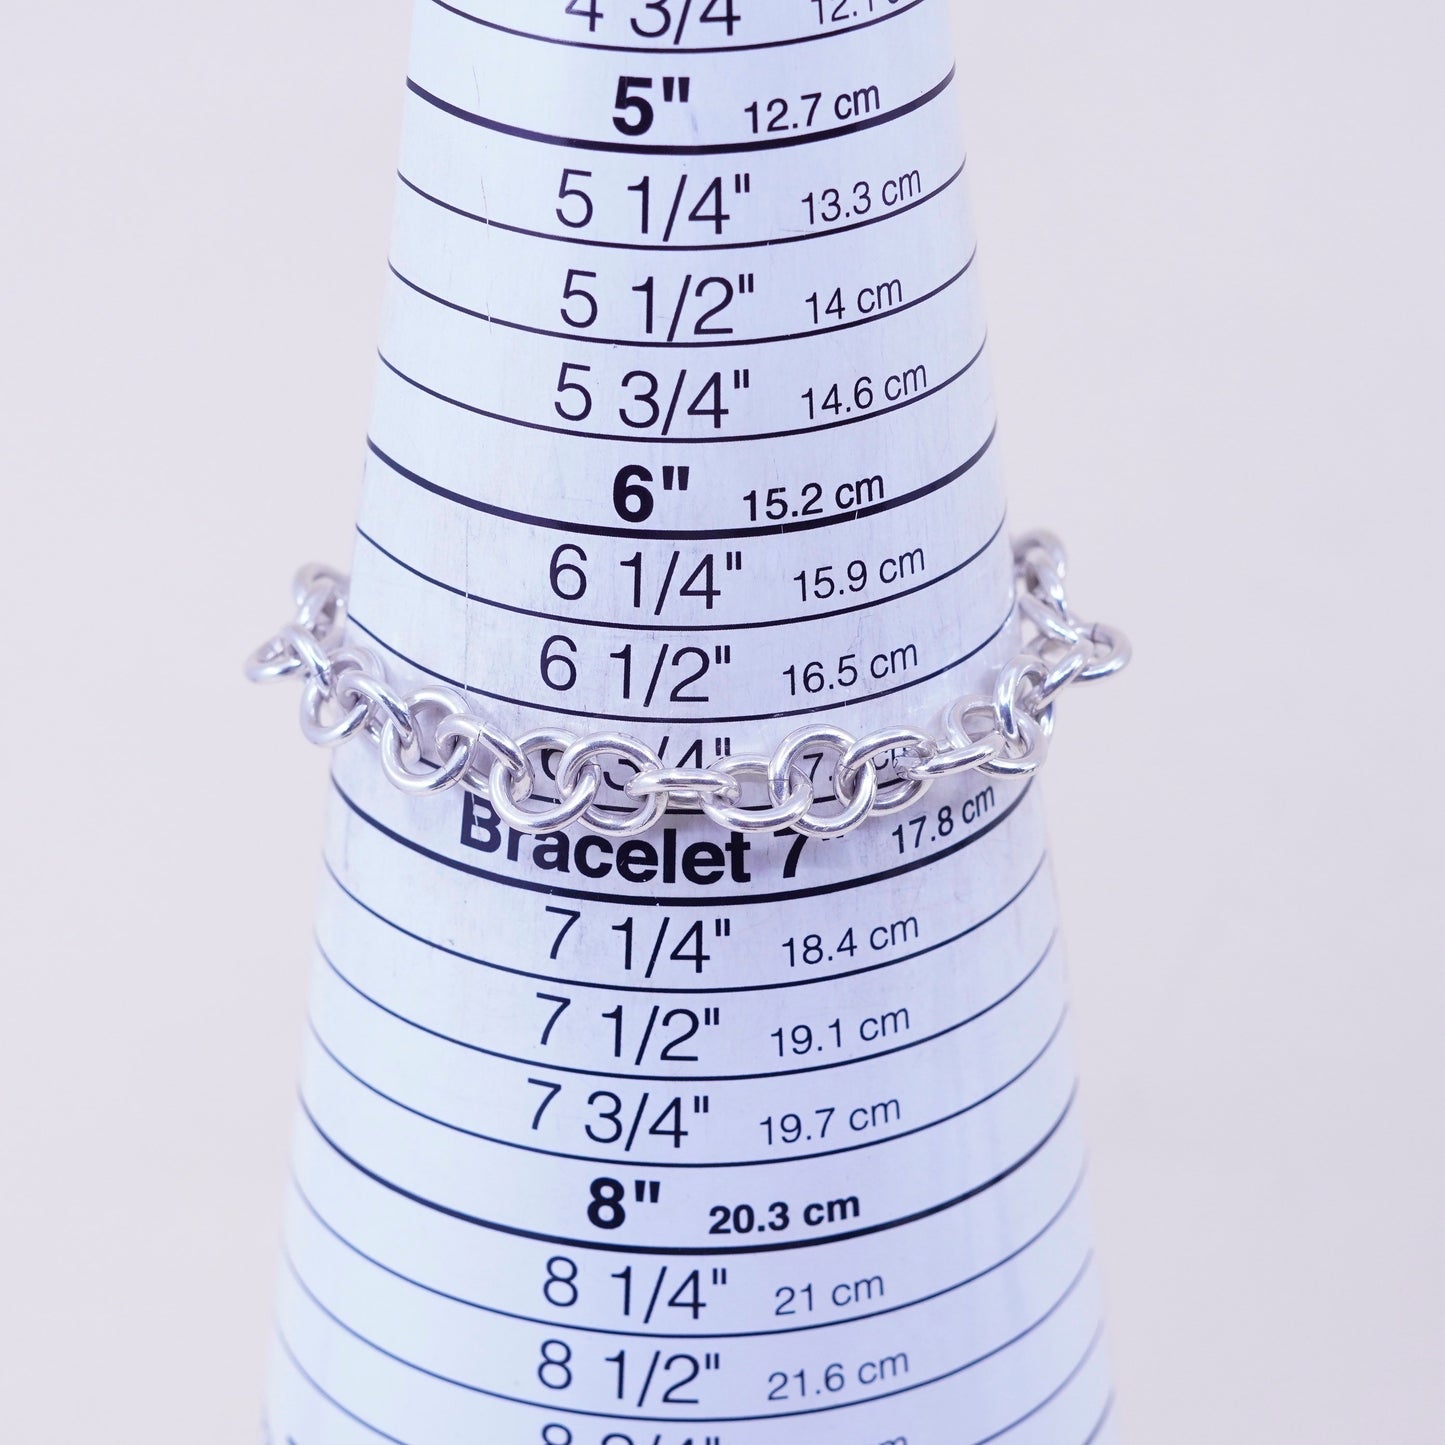 6.75”, Vintage sterling silver bracelet, handmade 925 circle chain heart charm